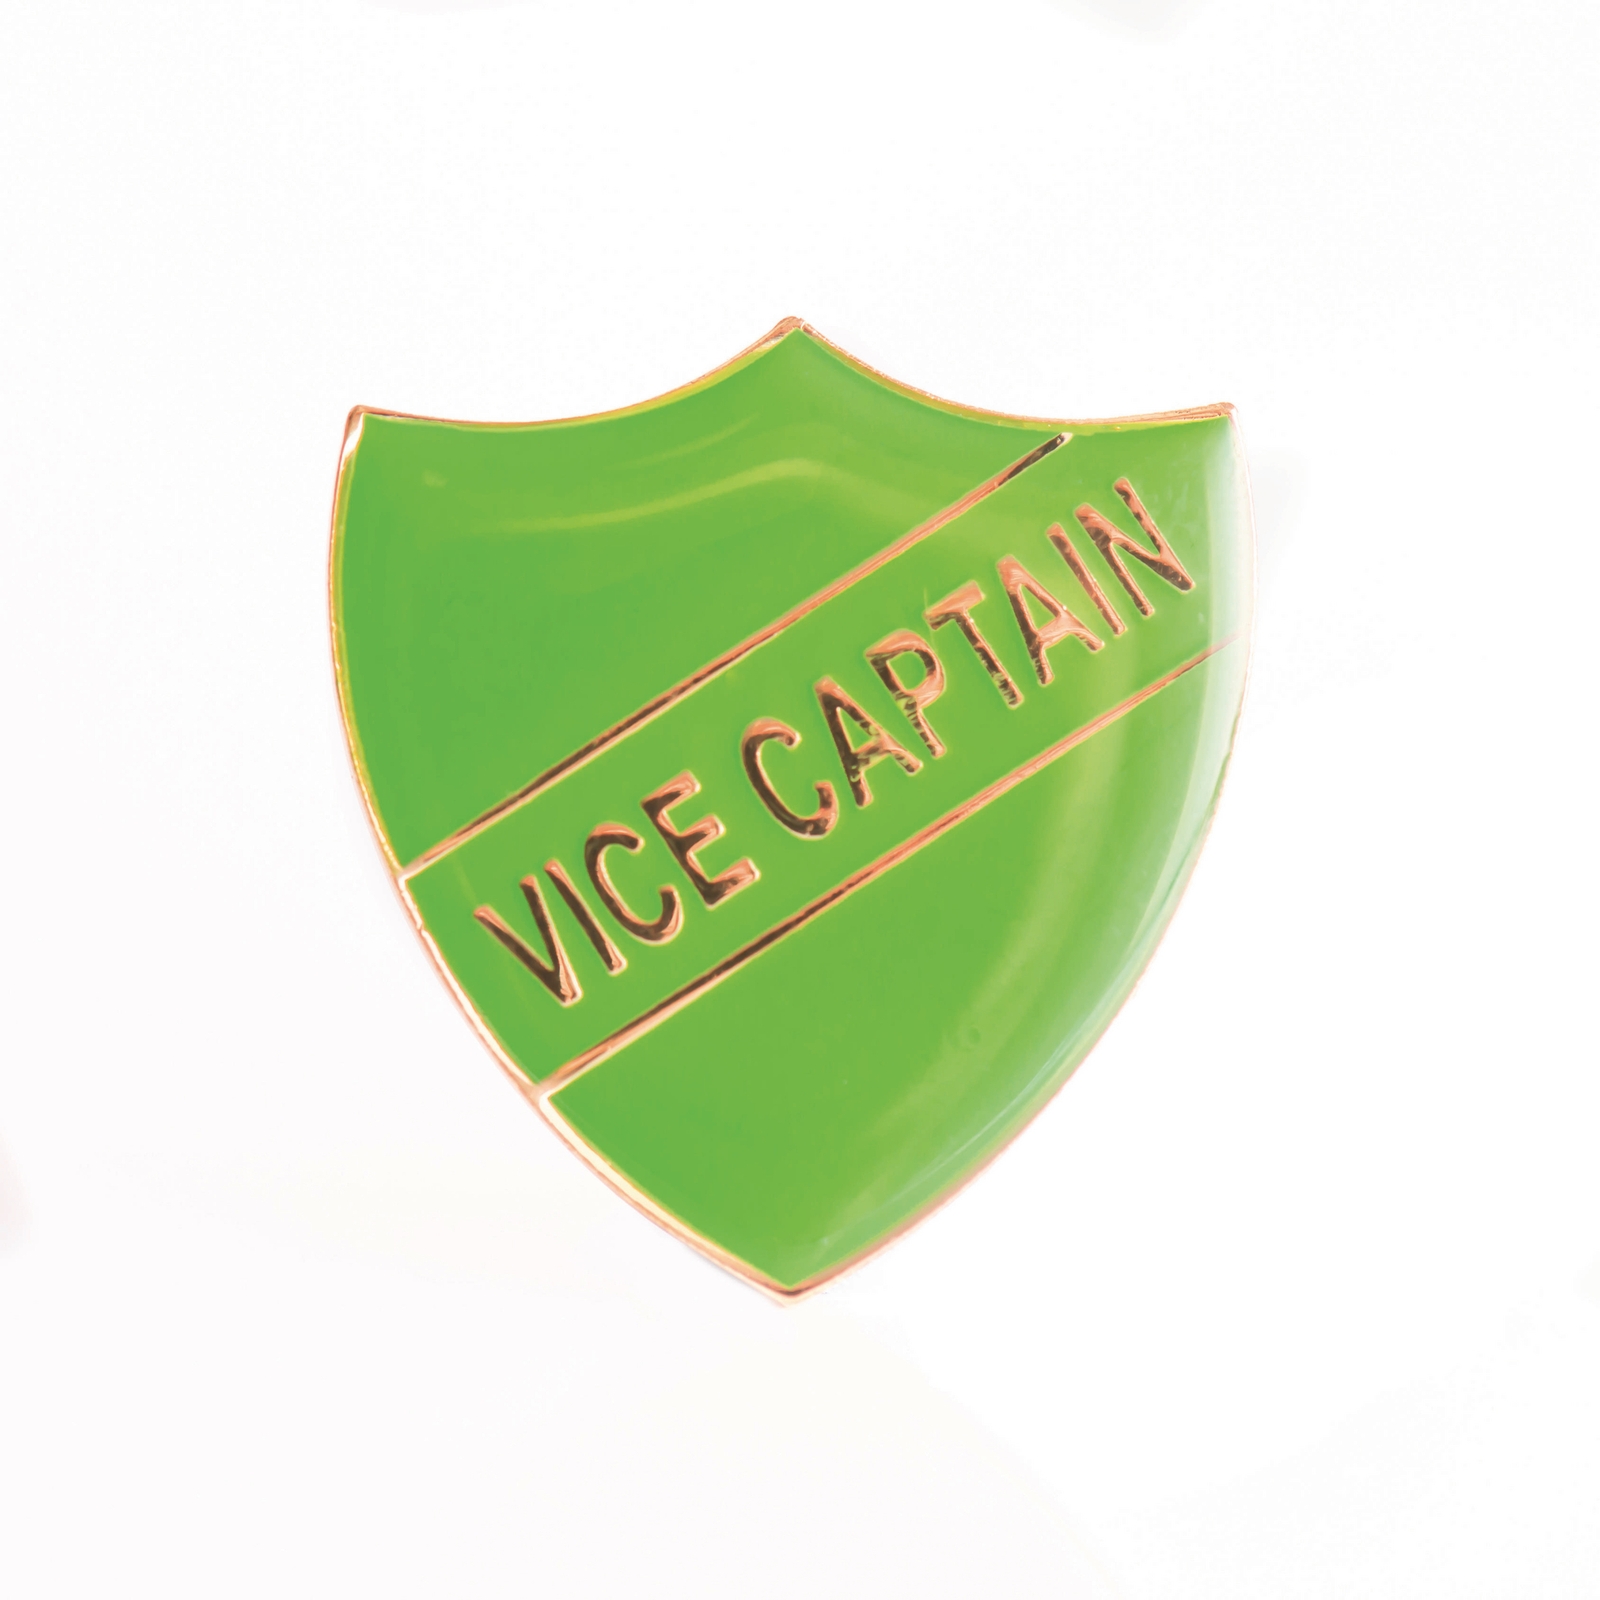 Vice Captain Shield - Green